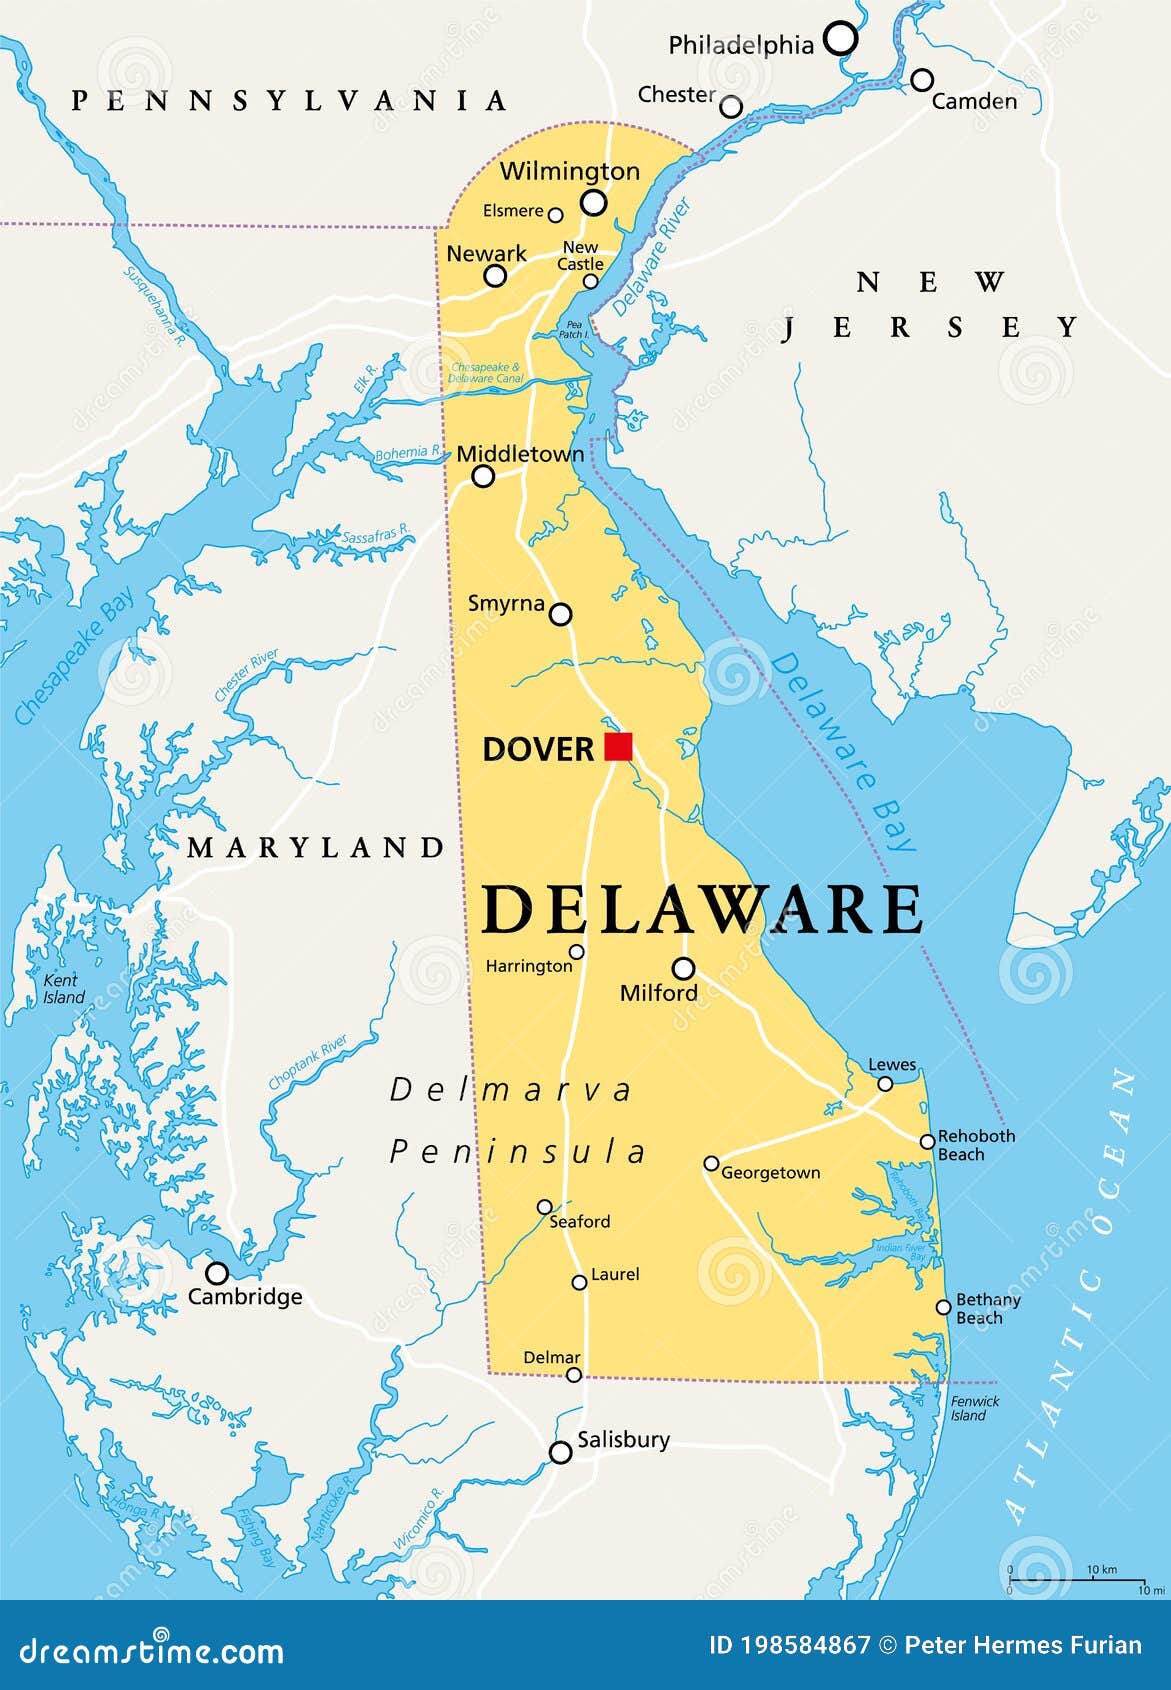 Delaware De Political Map First State Mid Atlantic Region United States America Capital Dover Small Wonder Blue Hen 198584867 